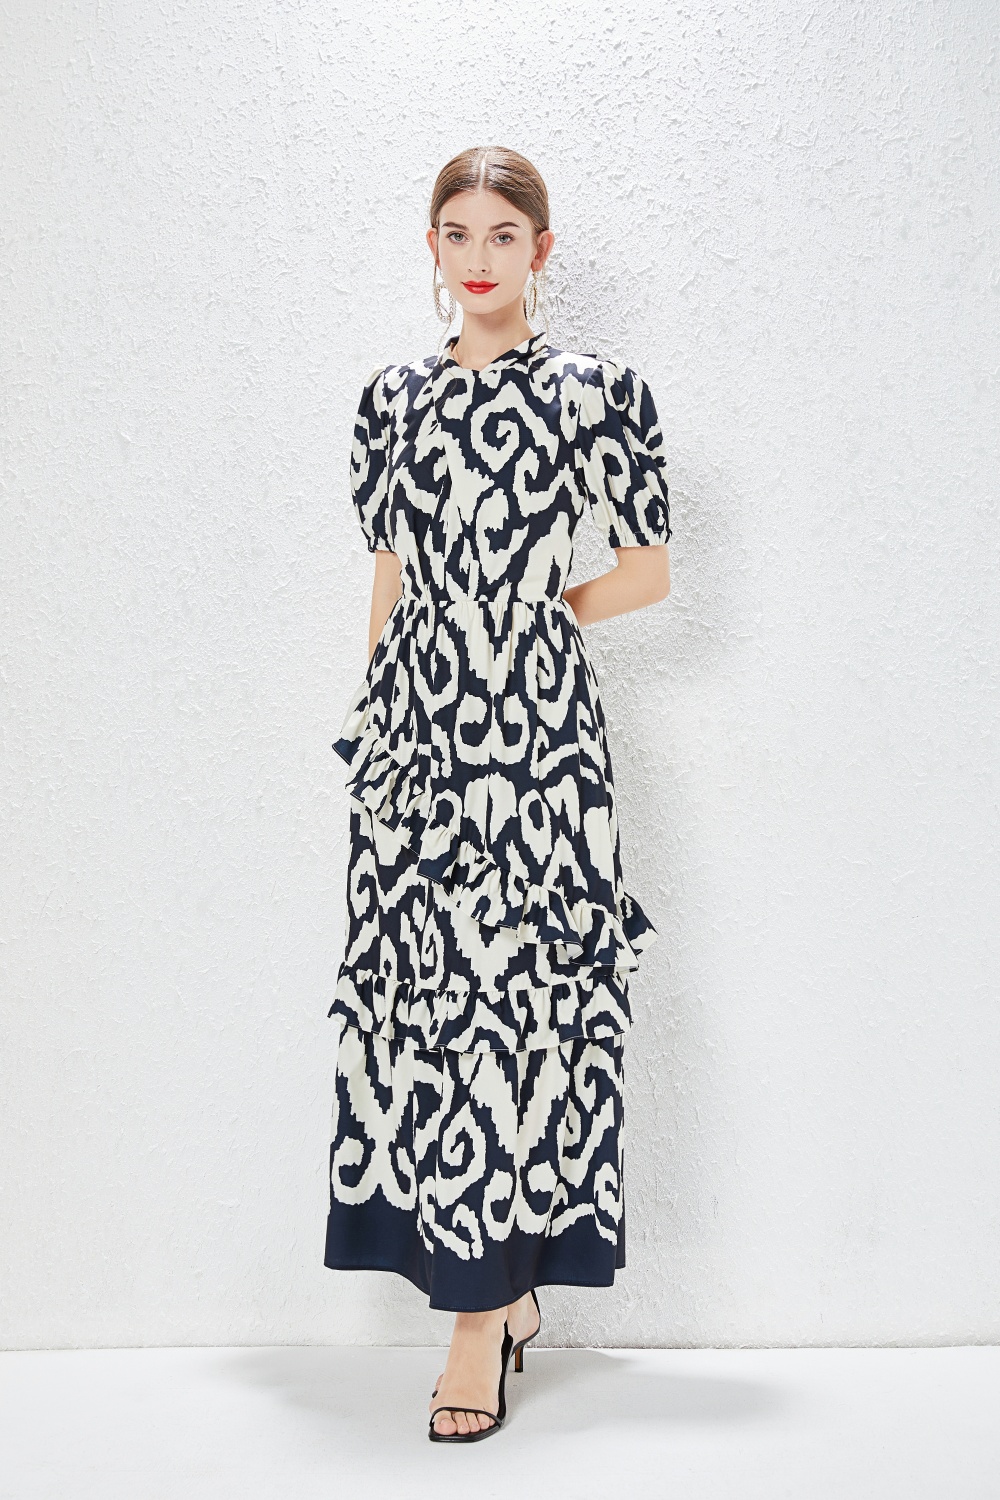 Leopard European style laminated dress